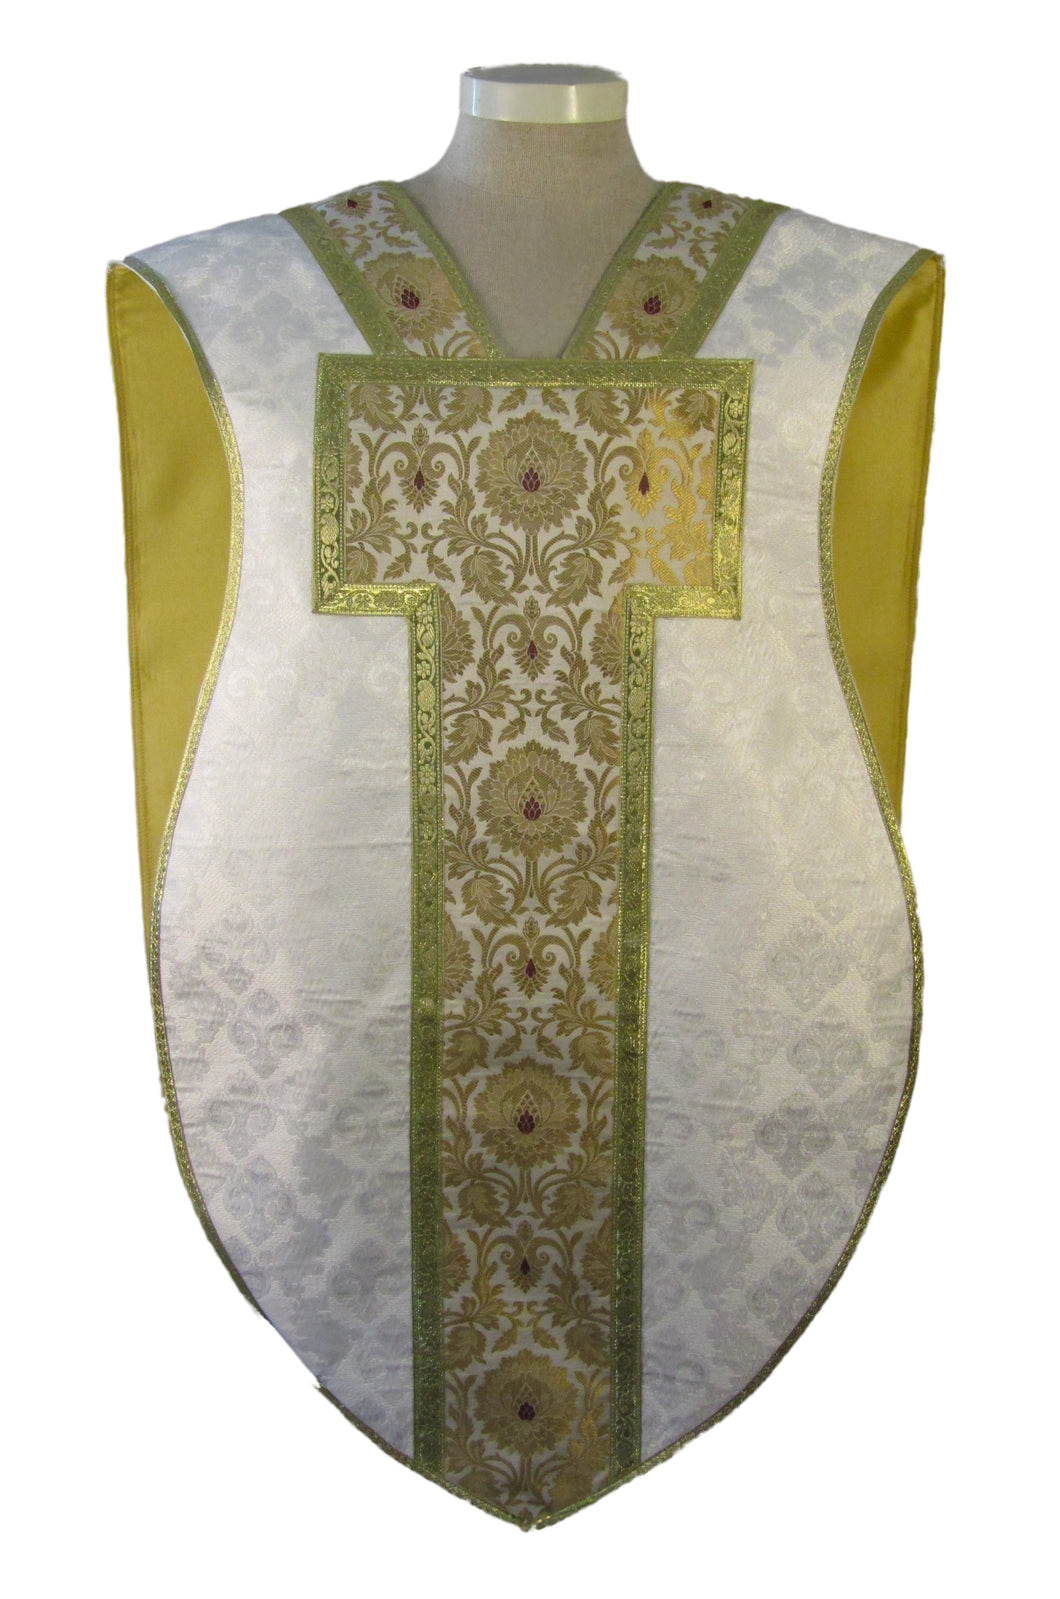 mds # PN1 - St. Philip Neri Chasuble Set, Jacquard fabrics.